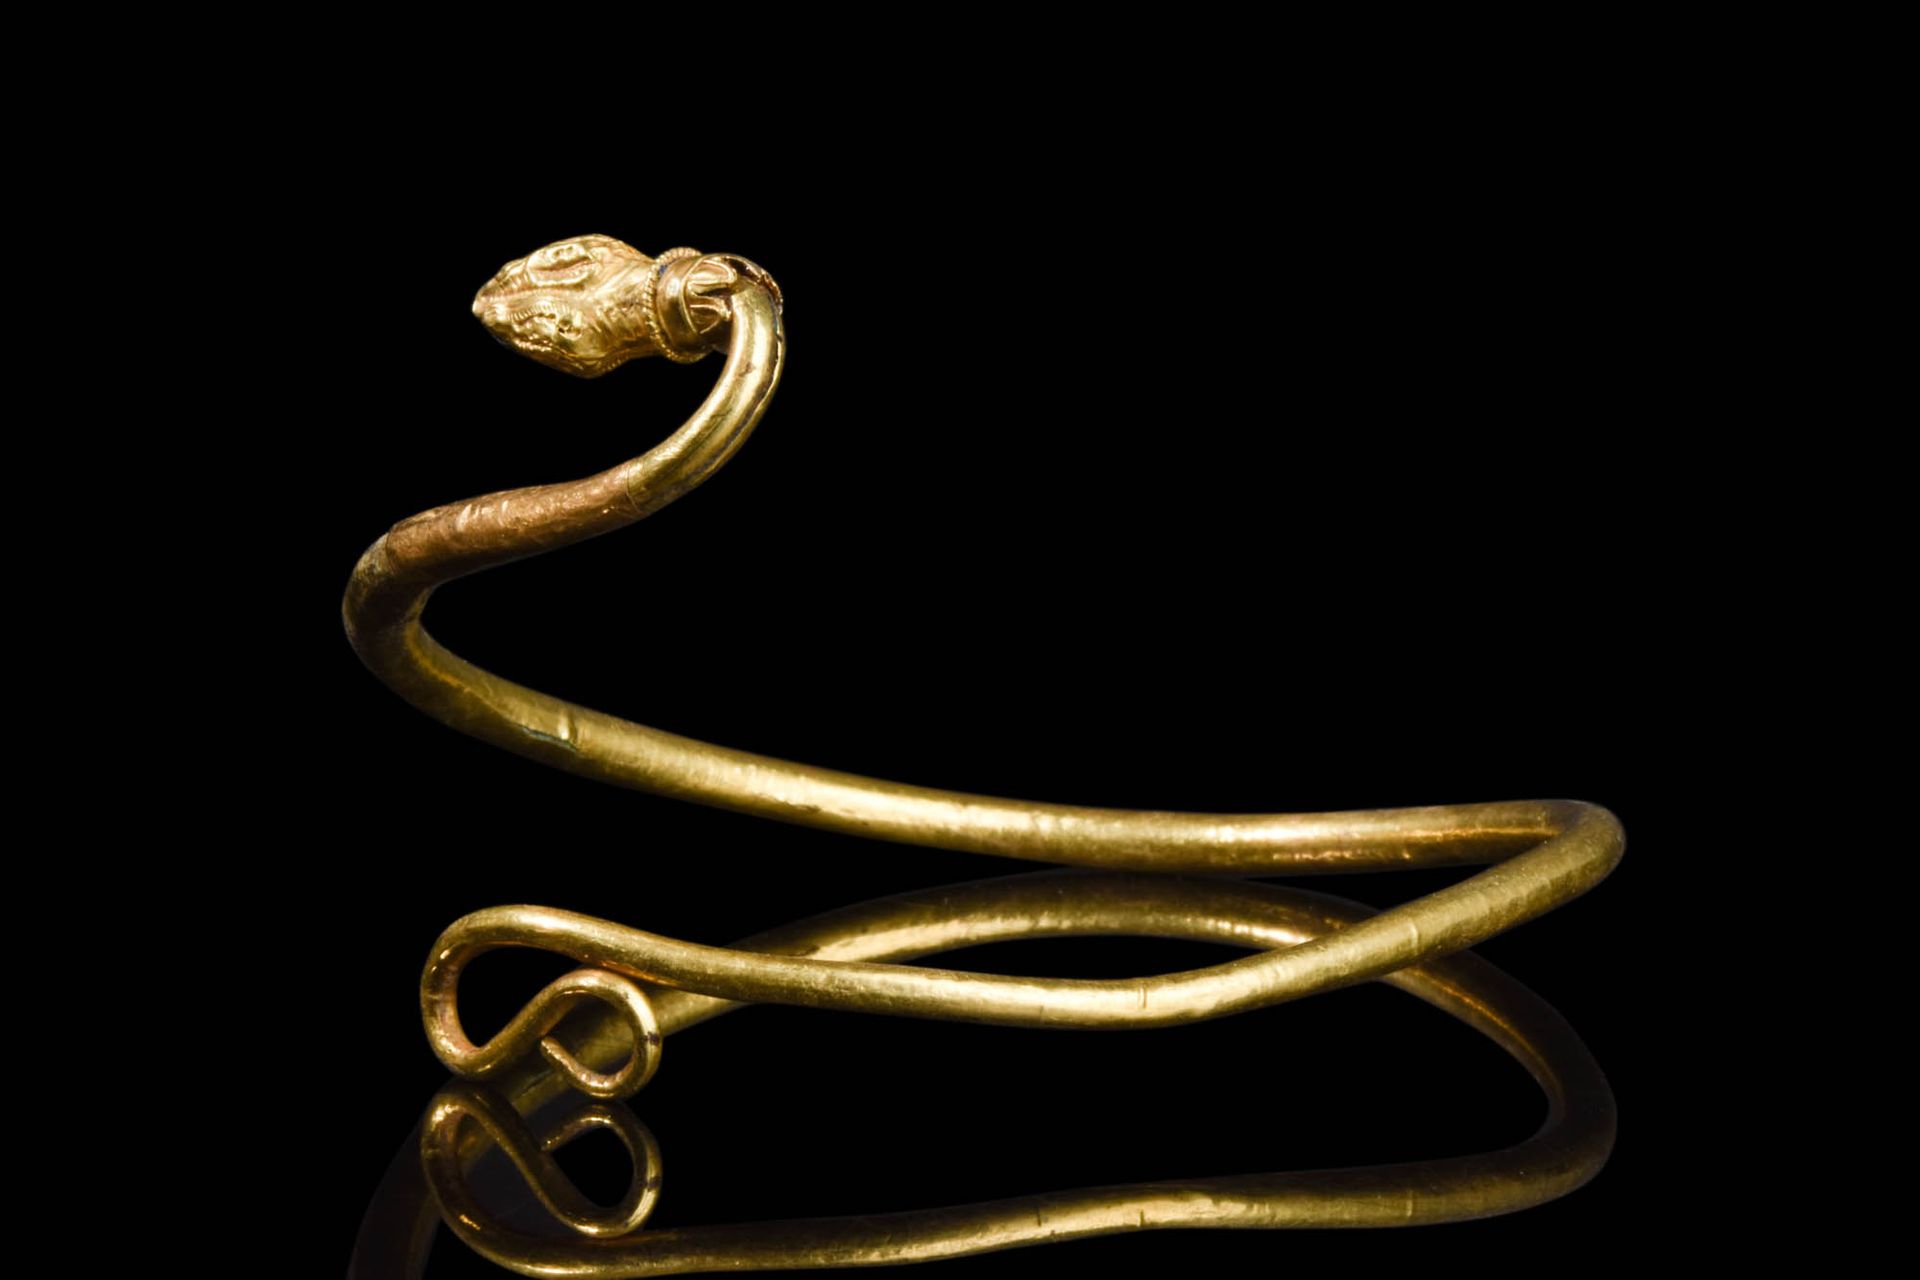 HEAVY PTOLEMAIC GOLD ARM RING Periodo ptolemaico, Ca. 525 - 30 A.C.
Pesado anill&hellip;